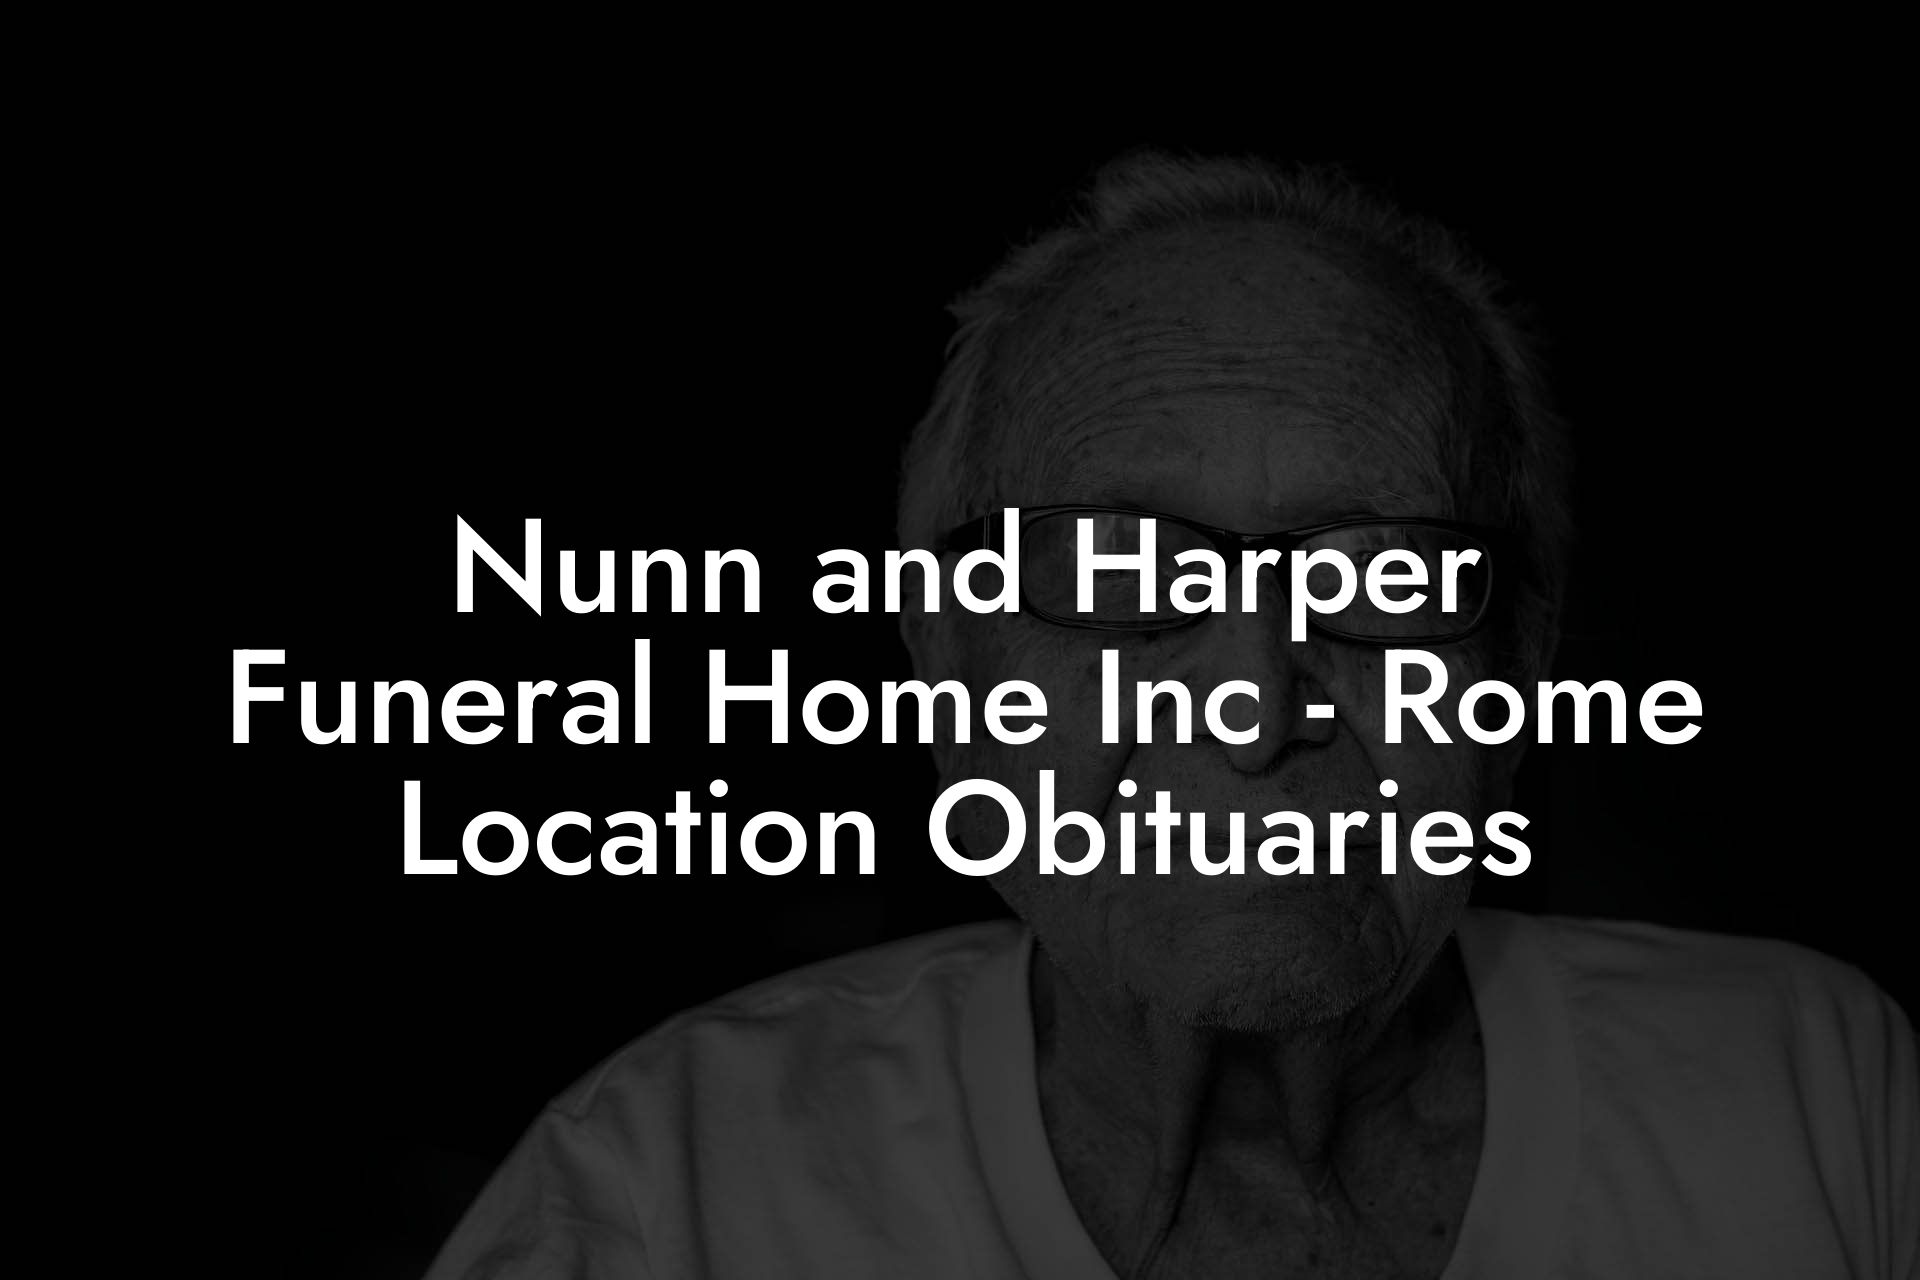 Nunn and Harper Funeral Home Inc - Rome Location Obituaries